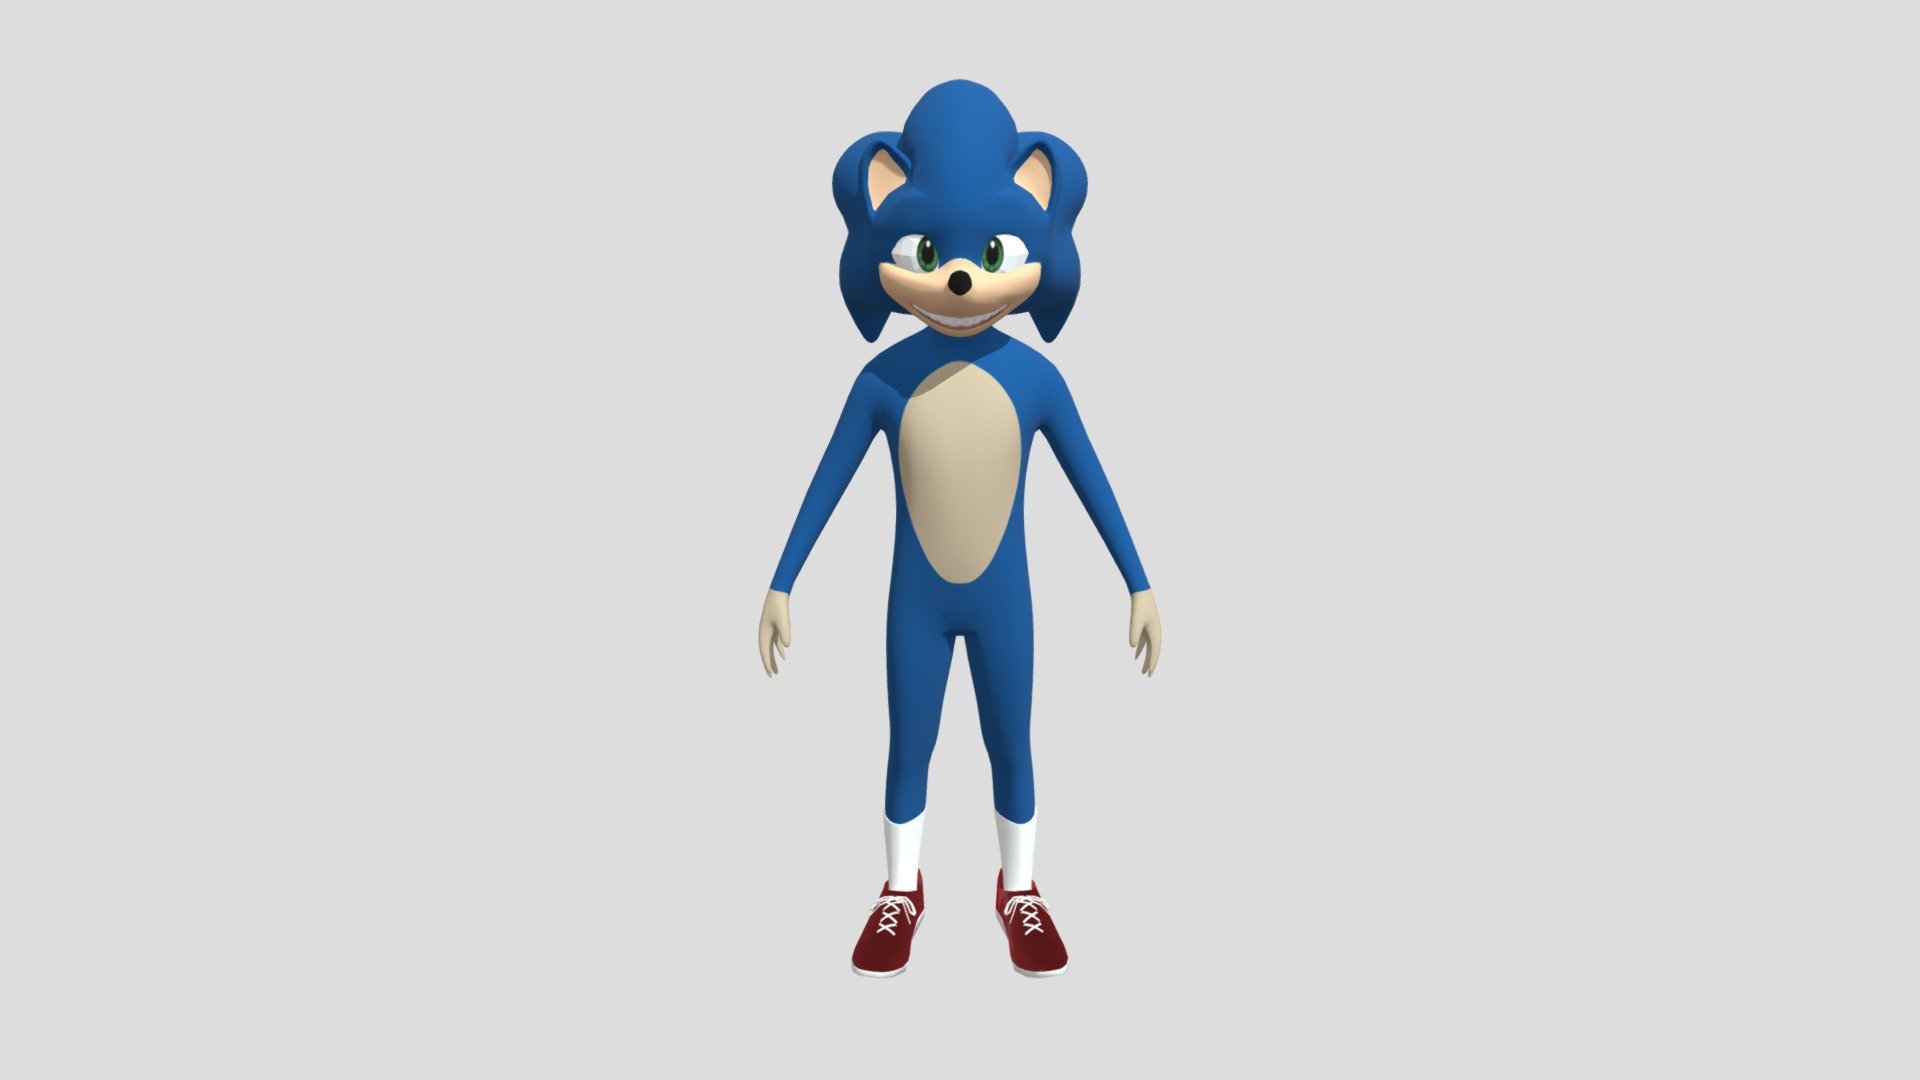 Xbox 360 - Sonic the Hedgehog (2006) - Dr. Eggman - The Models